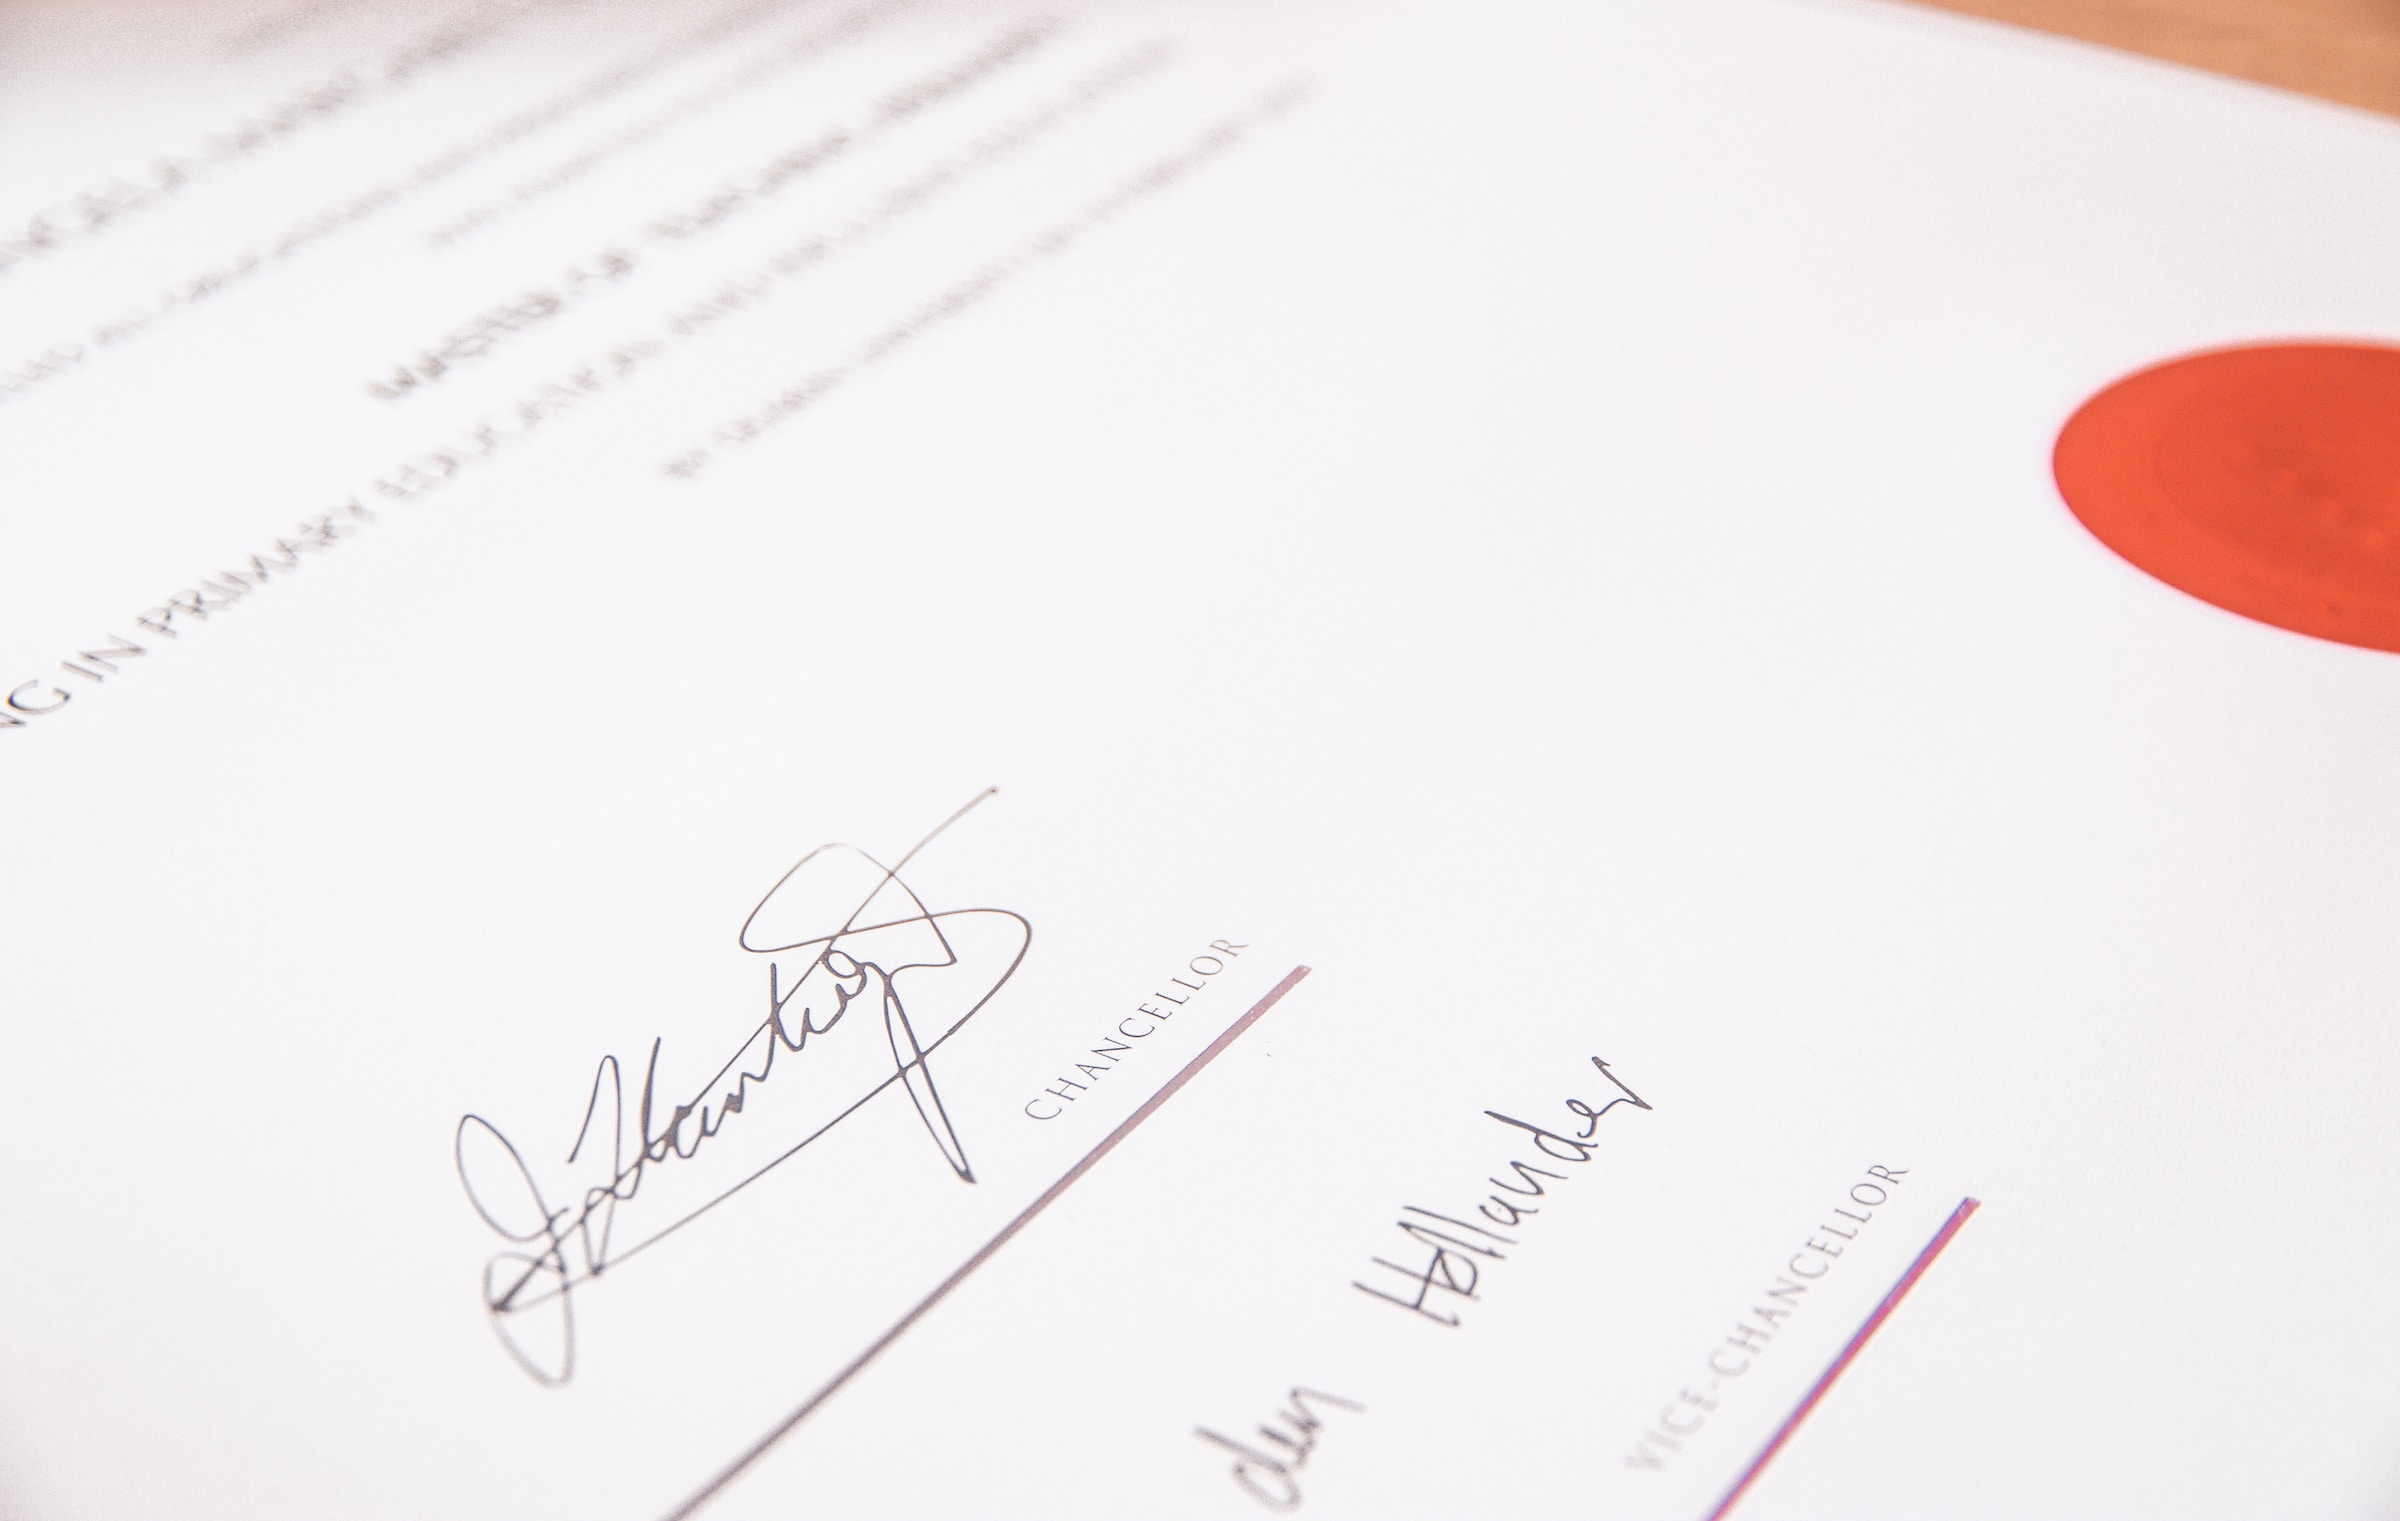 Formulario legal con firmas | Foto: Unsplash